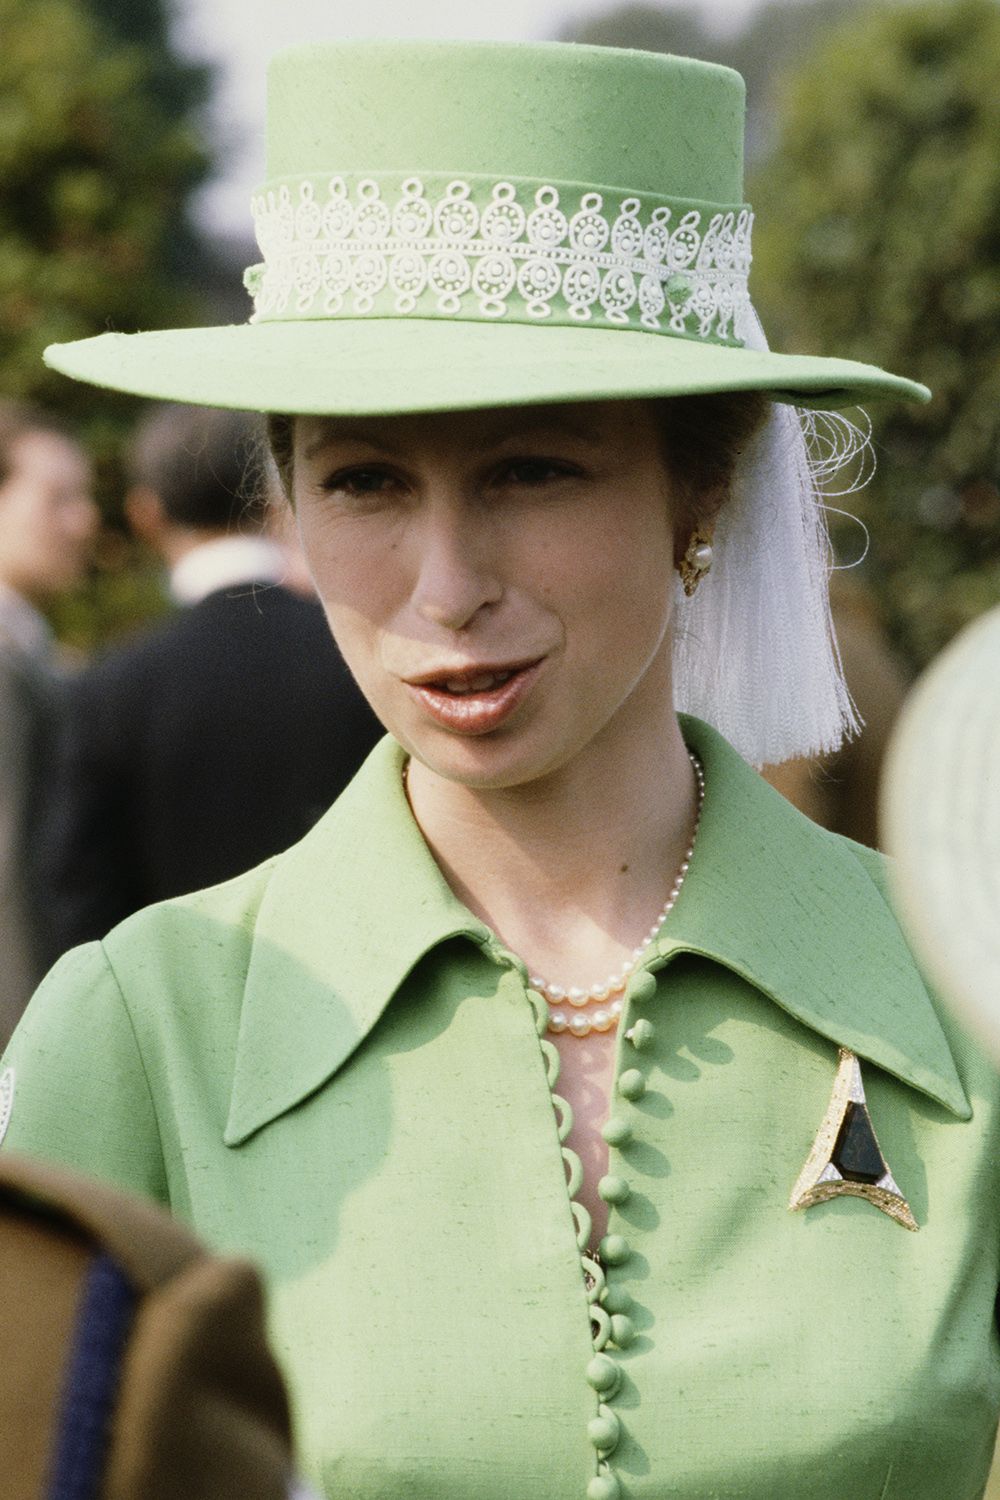 70 Best Royal Hats in History - Most Memorable Royal Family Fascinators